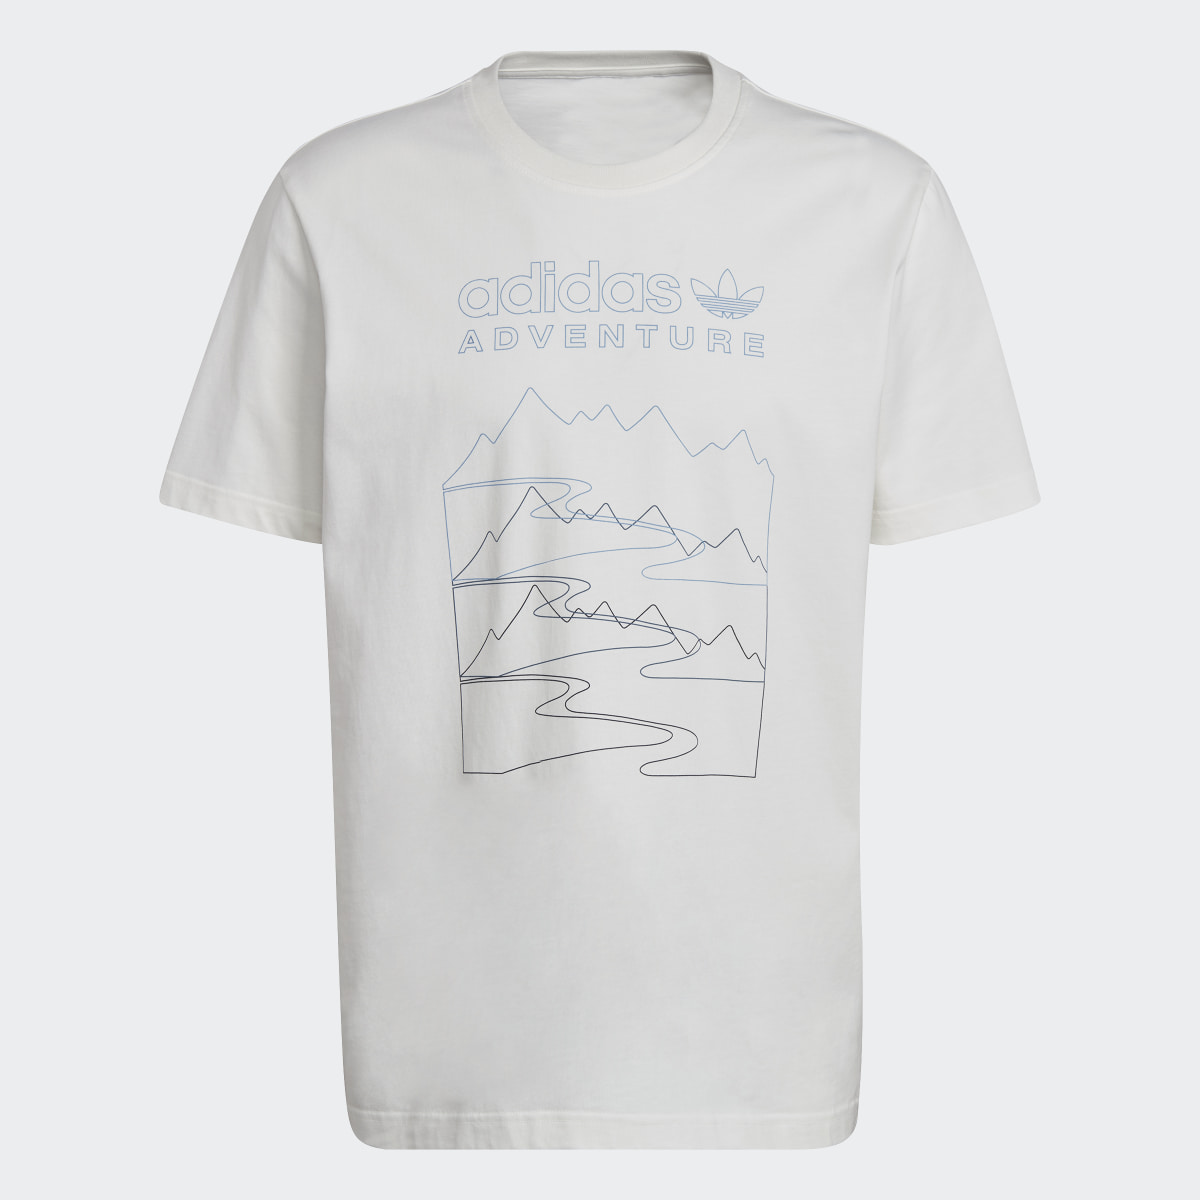 Adidas Adventure Mountain Front T-Shirt. 5